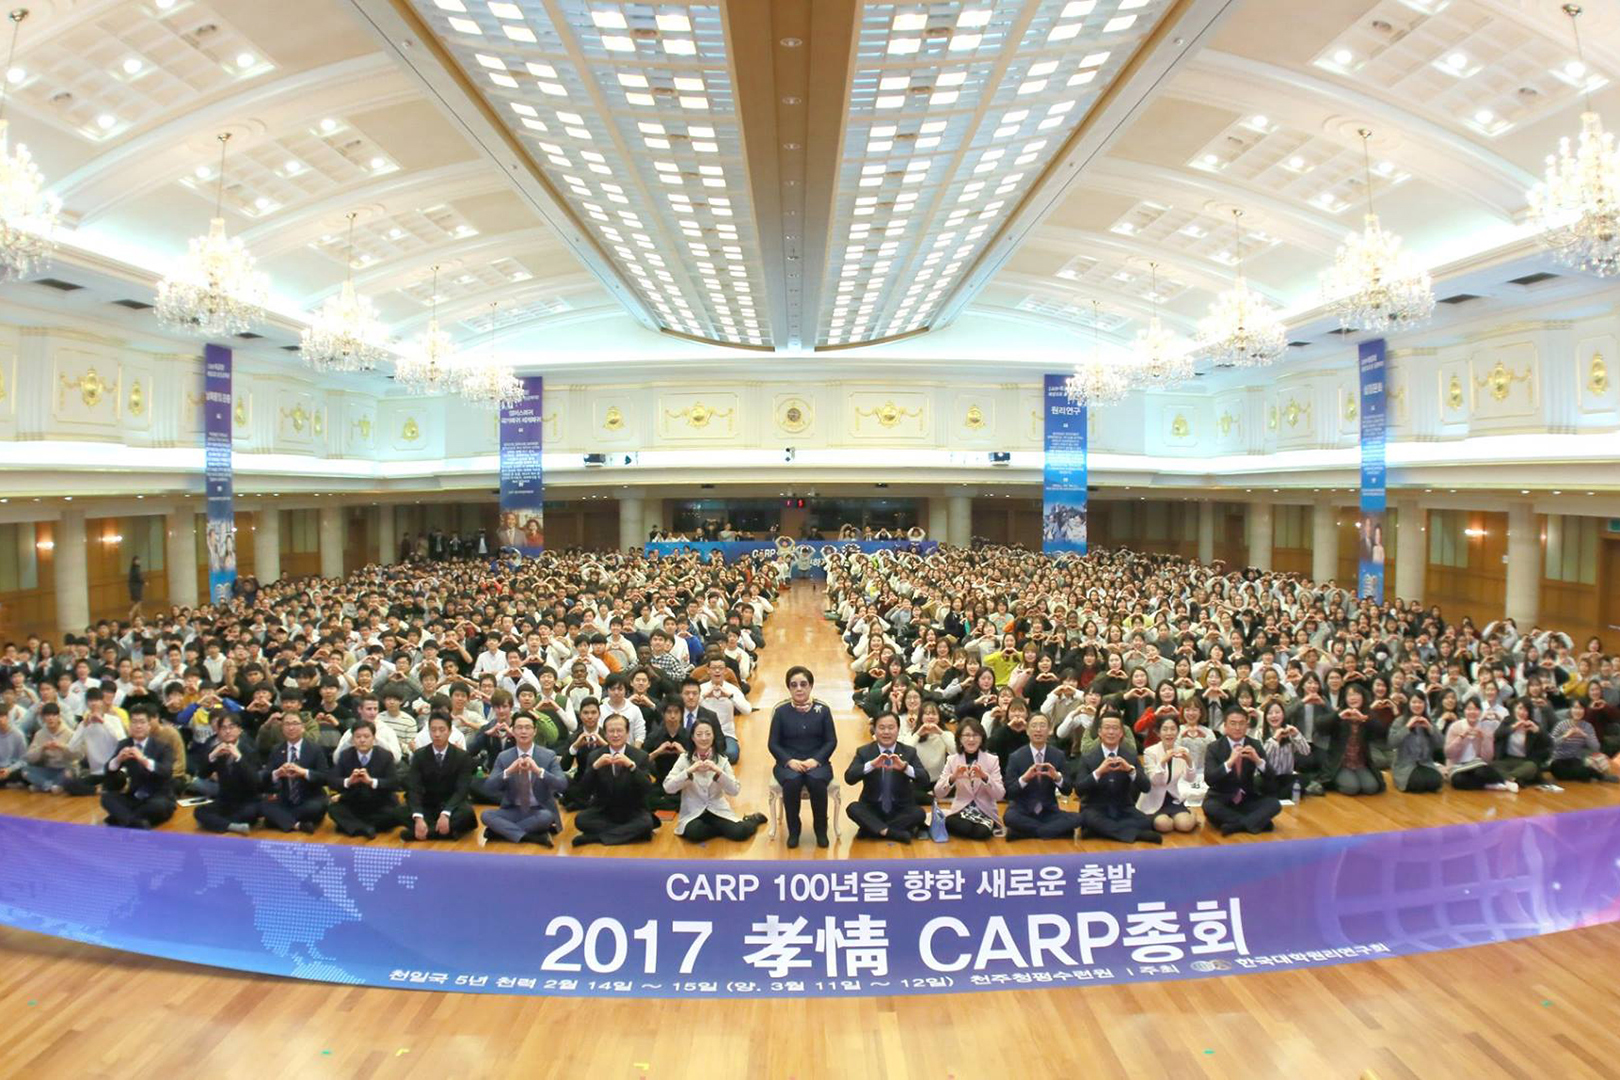 2017 Special CARP Assembly, Korea A new beginning towards CARP's centenary (March 12, 2017)